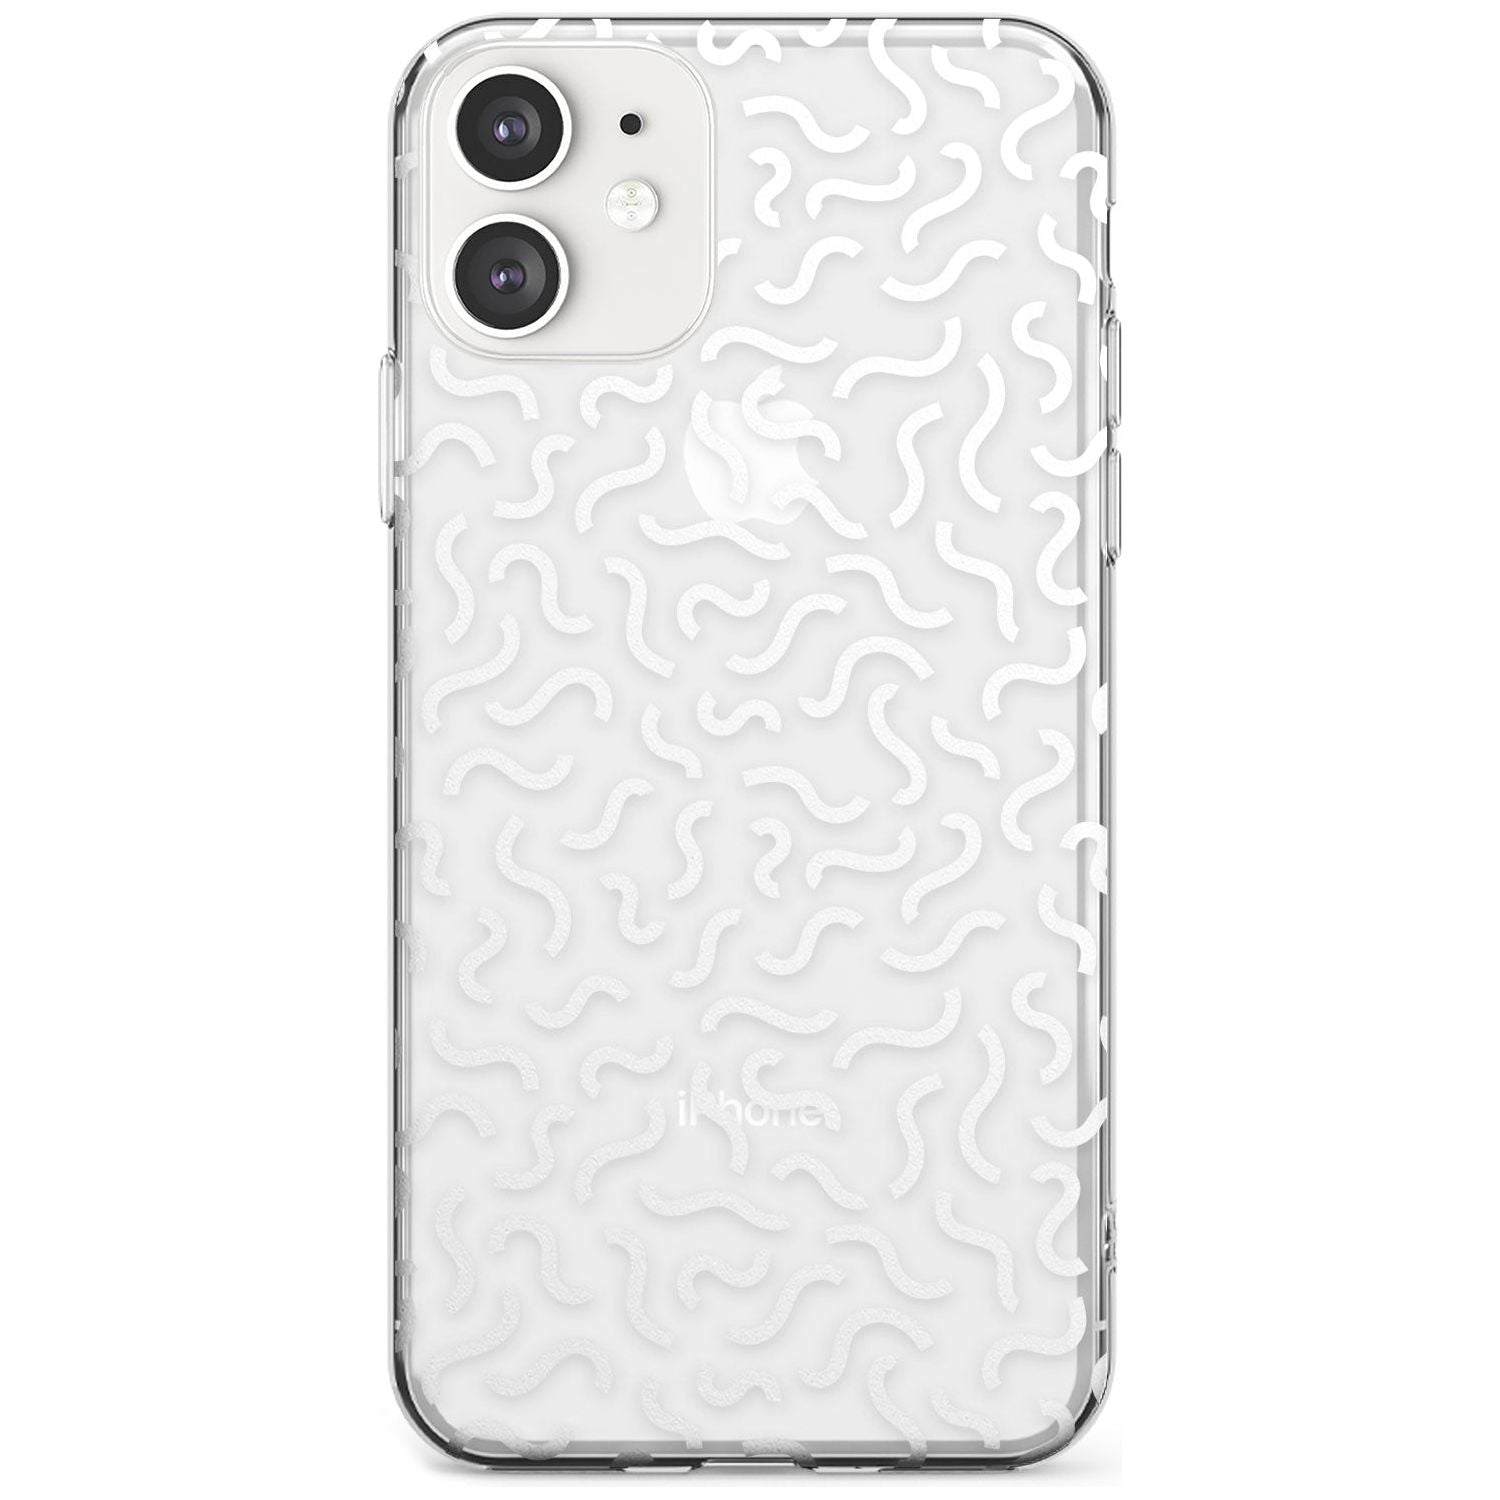 White Wavy Squiggles Memphis Retro Pattern Design Slim TPU Phone Case for iPhone 11